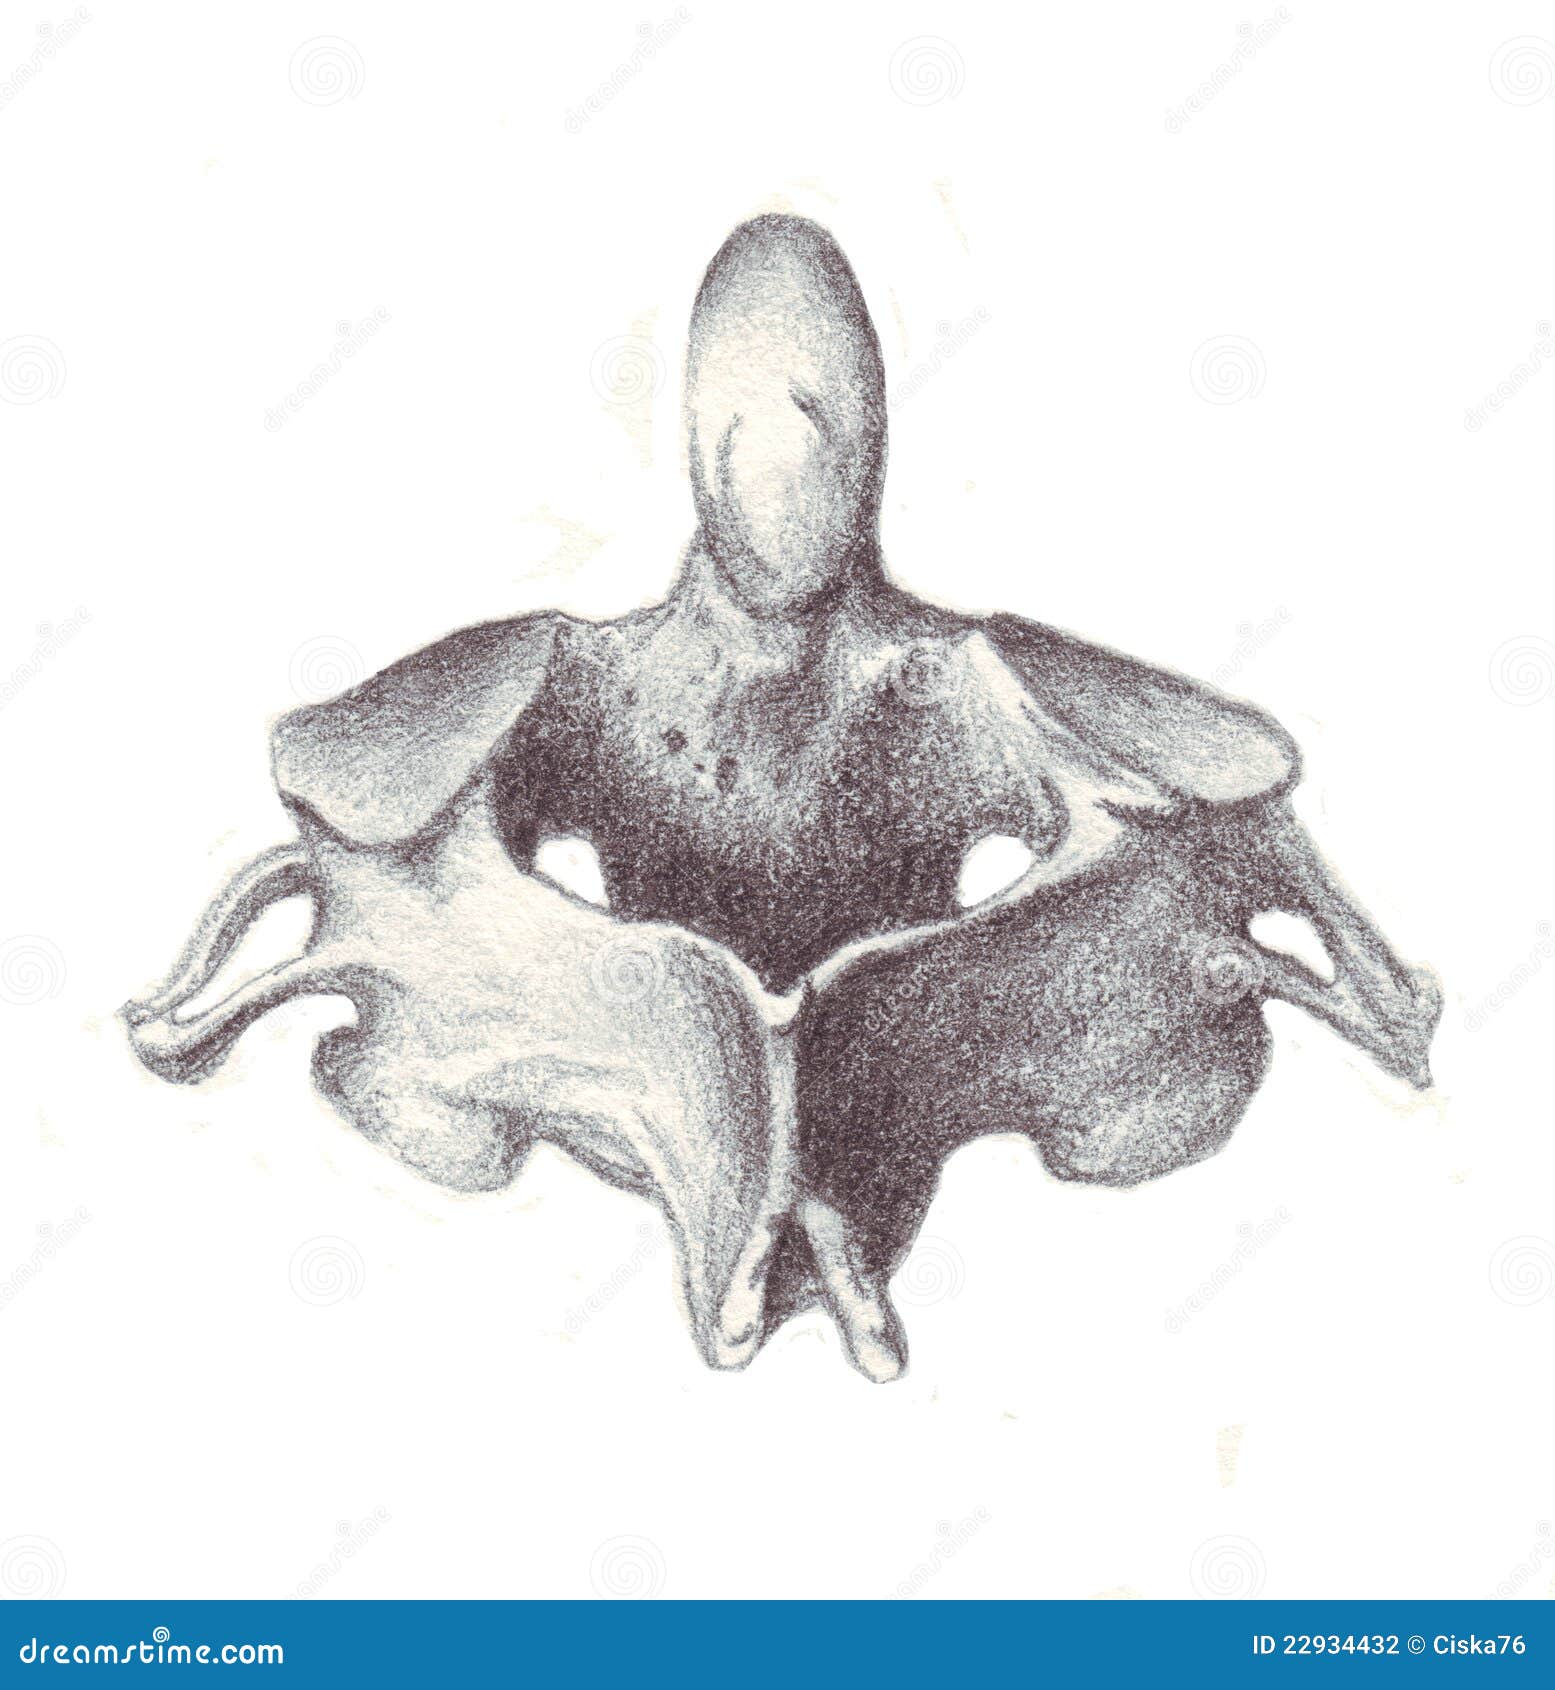 human anatomy - cervical vertebra